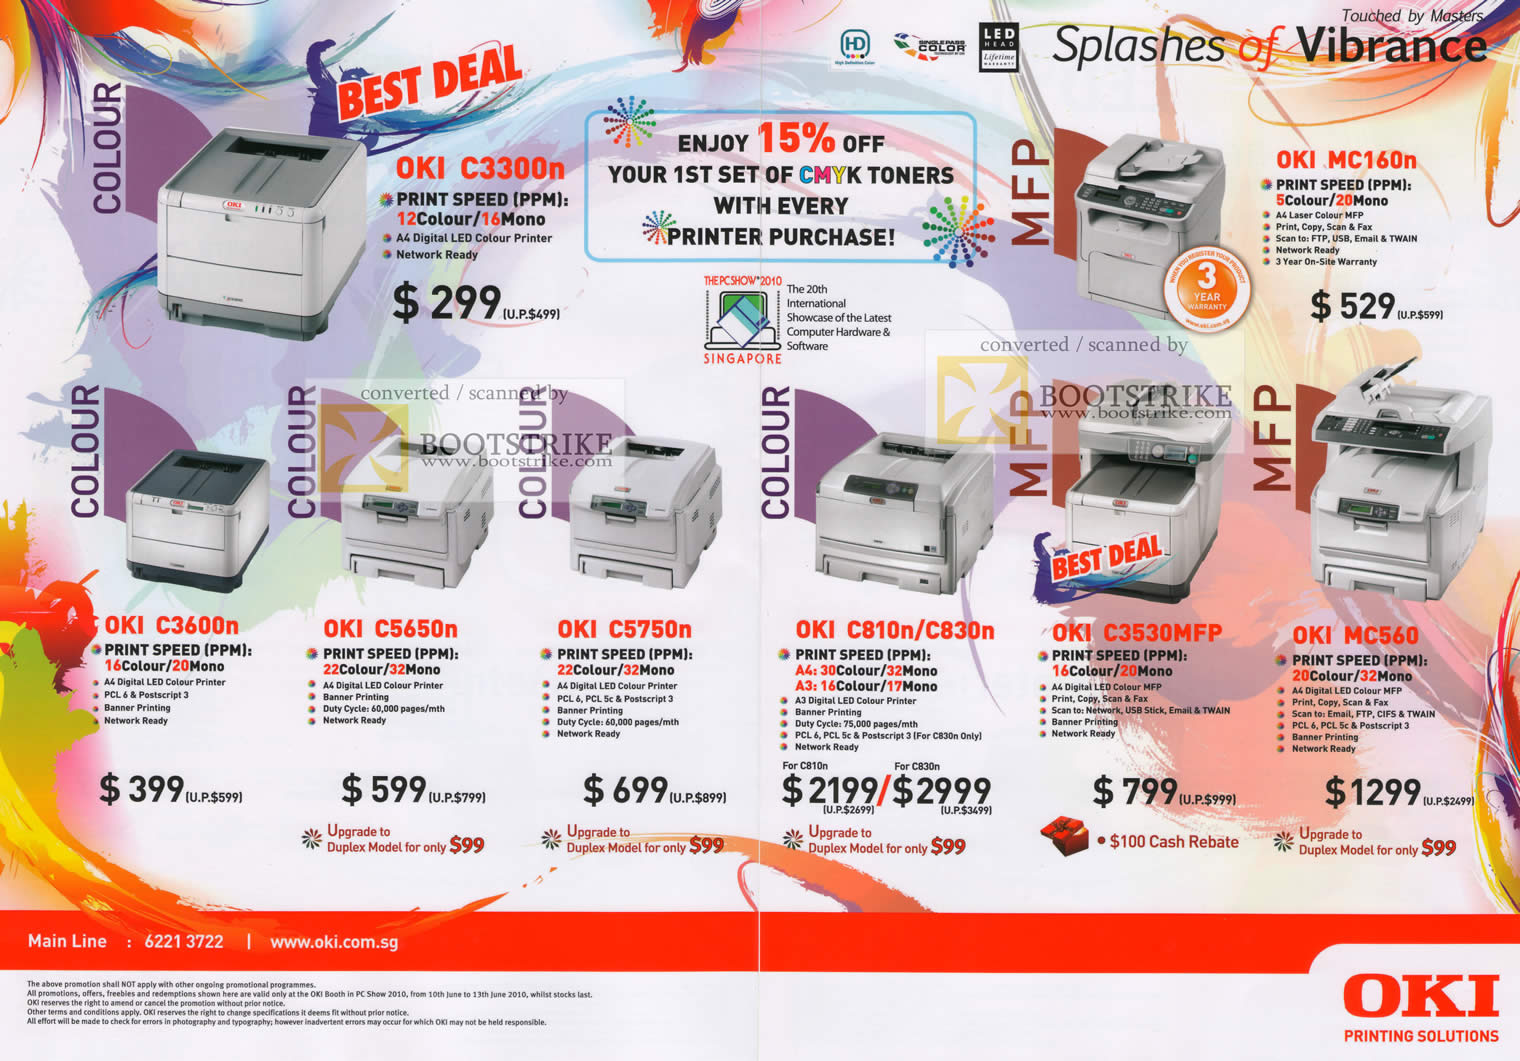 PC Show 2010 price list image brochure of OKI A2042 LED Colour Printers C3300n C3600n C5650n C5750n C810n C830n C3530MFP MC560 MC160n